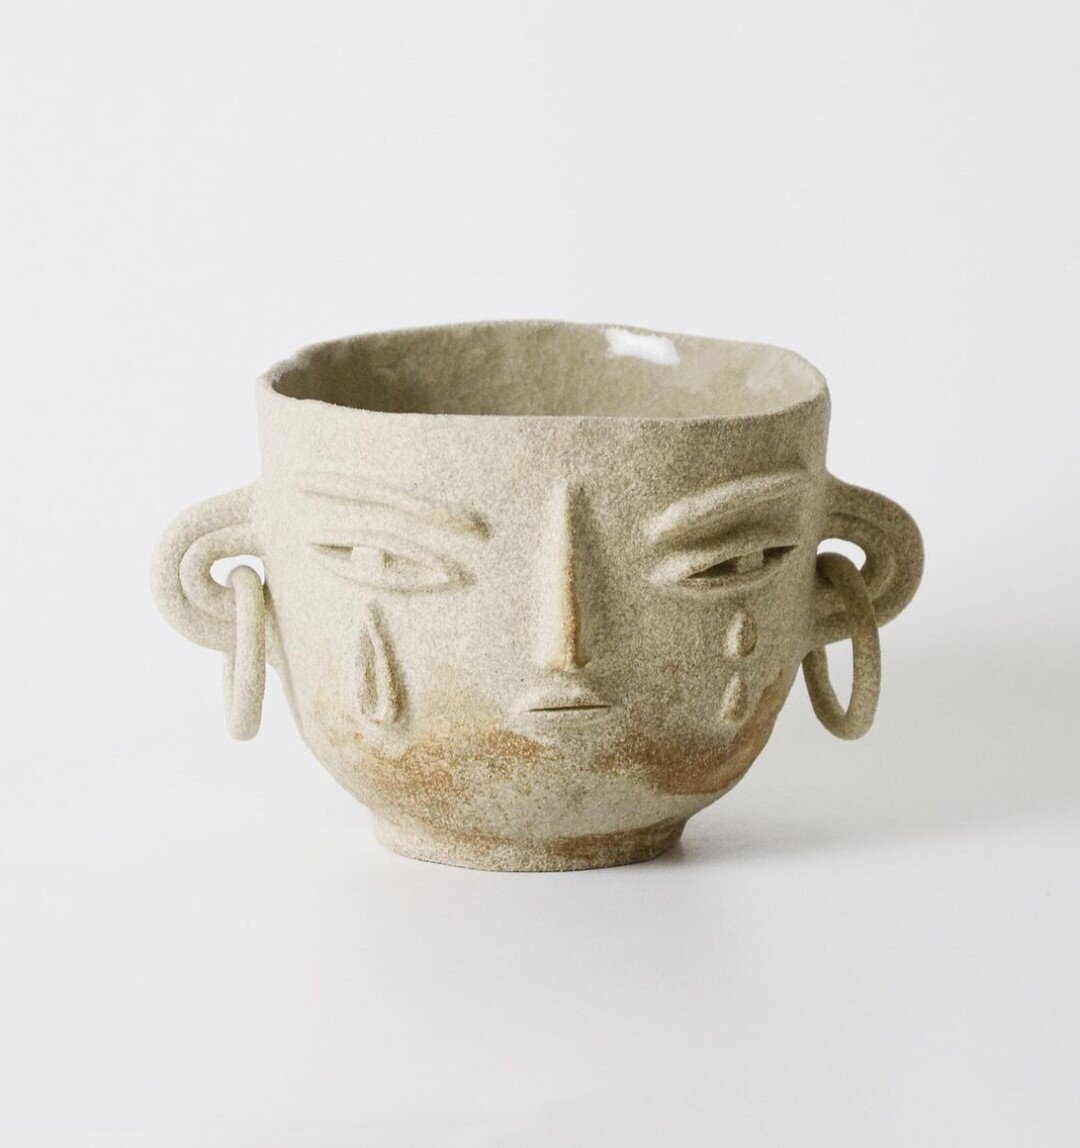 Organic handmade ceramics give the perfect touch ⁠&mdash;⠀⠀⠀⠀⠀⠀⠀⠀⠀
⠀⠀⠀⠀⠀⠀⠀⠀⠀
Lara via@miri_orenstein⠀⠀⠀⠀⠀⠀⠀⠀⠀
⠀⠀⠀⠀⠀⠀⠀⠀⠀
⠀⠀⠀⠀⠀⠀⠀⠀⠀
#pottery #modernceramics #modernpottery #speckled  #desertvibes